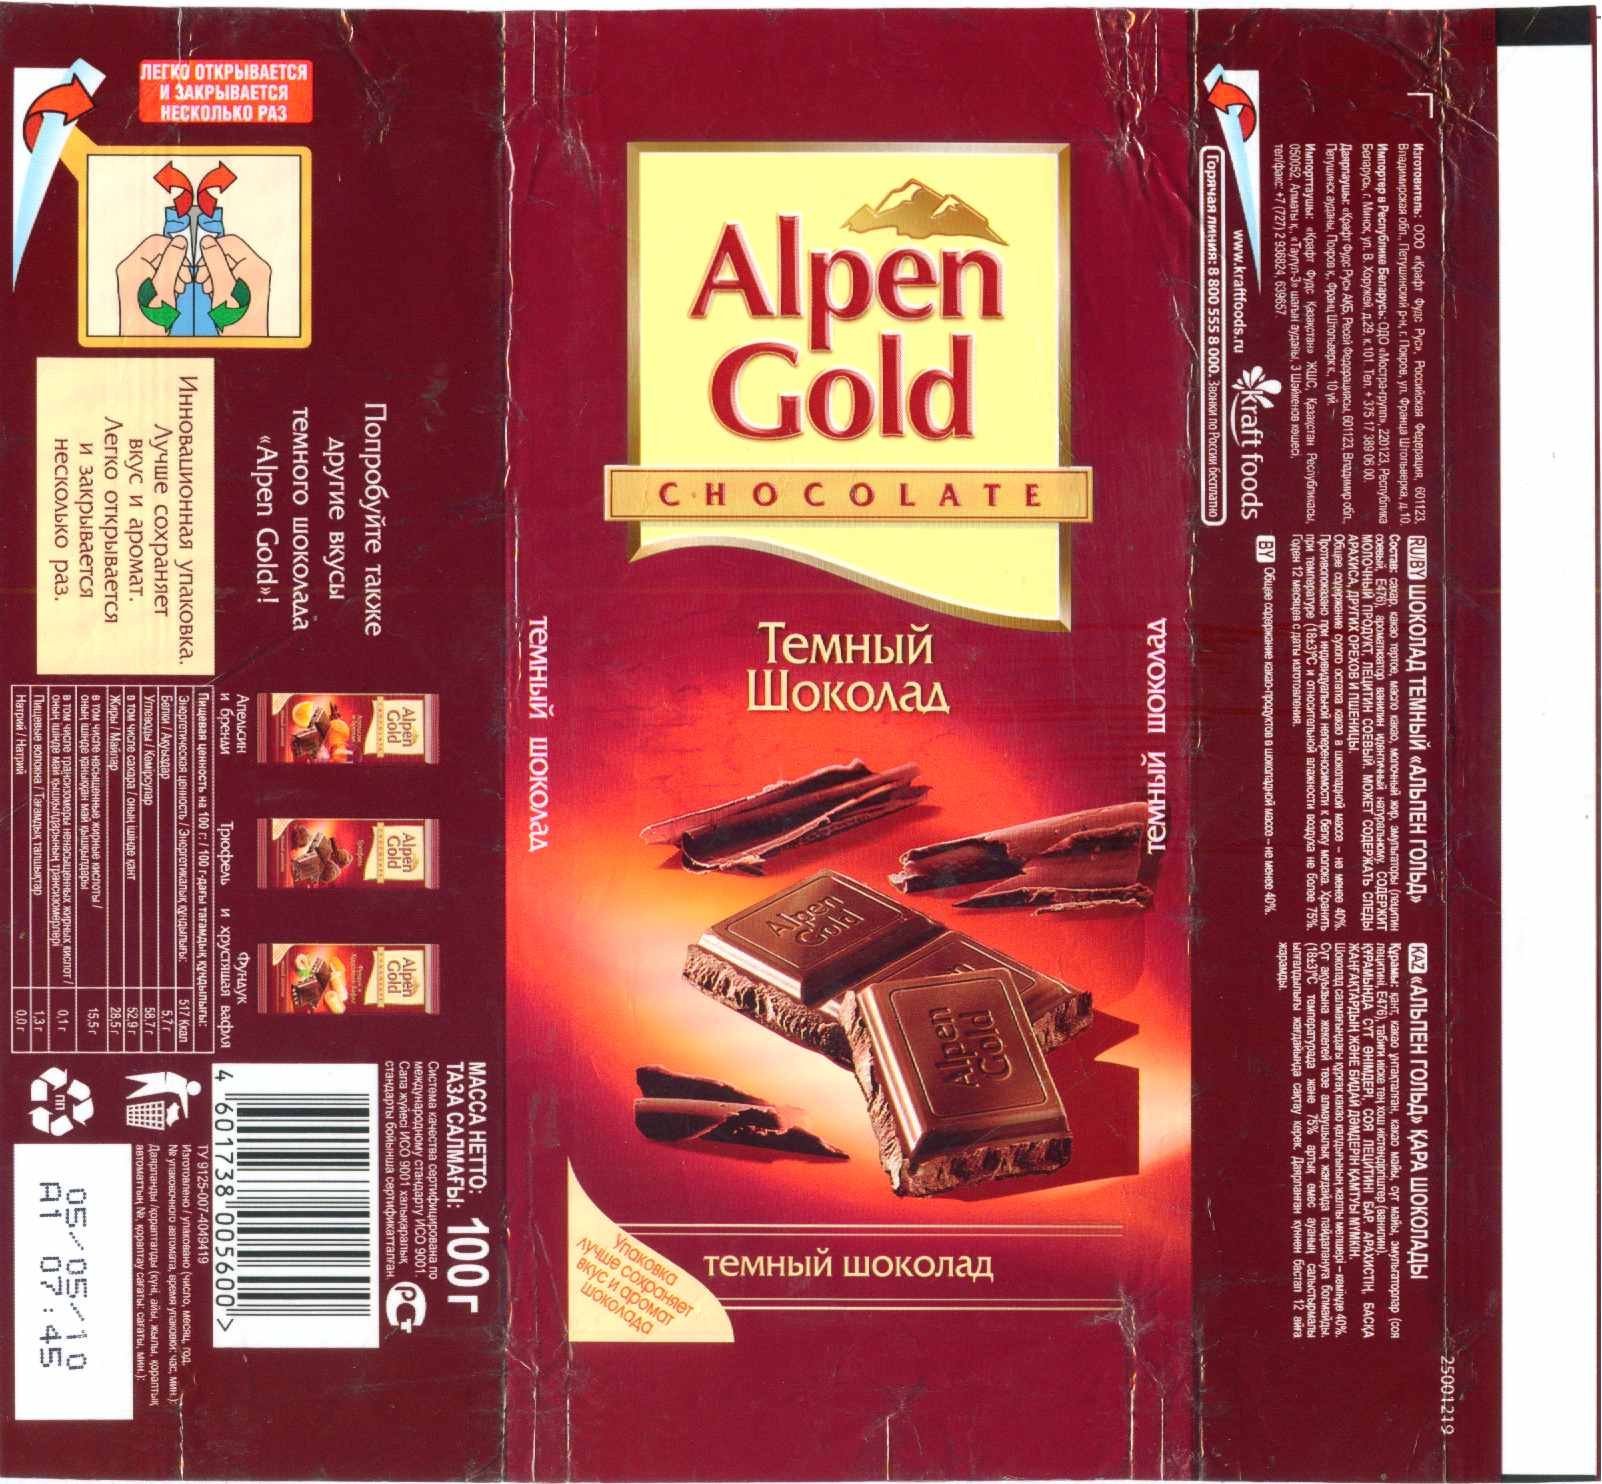 Пачки шоколада. Вкусы шоколада Альпен Гольд. Состав шоколада Альпен Гольд. Шоколад Альпен Гольд темный шоколад. Альпен Гольд темный шоколад состав.